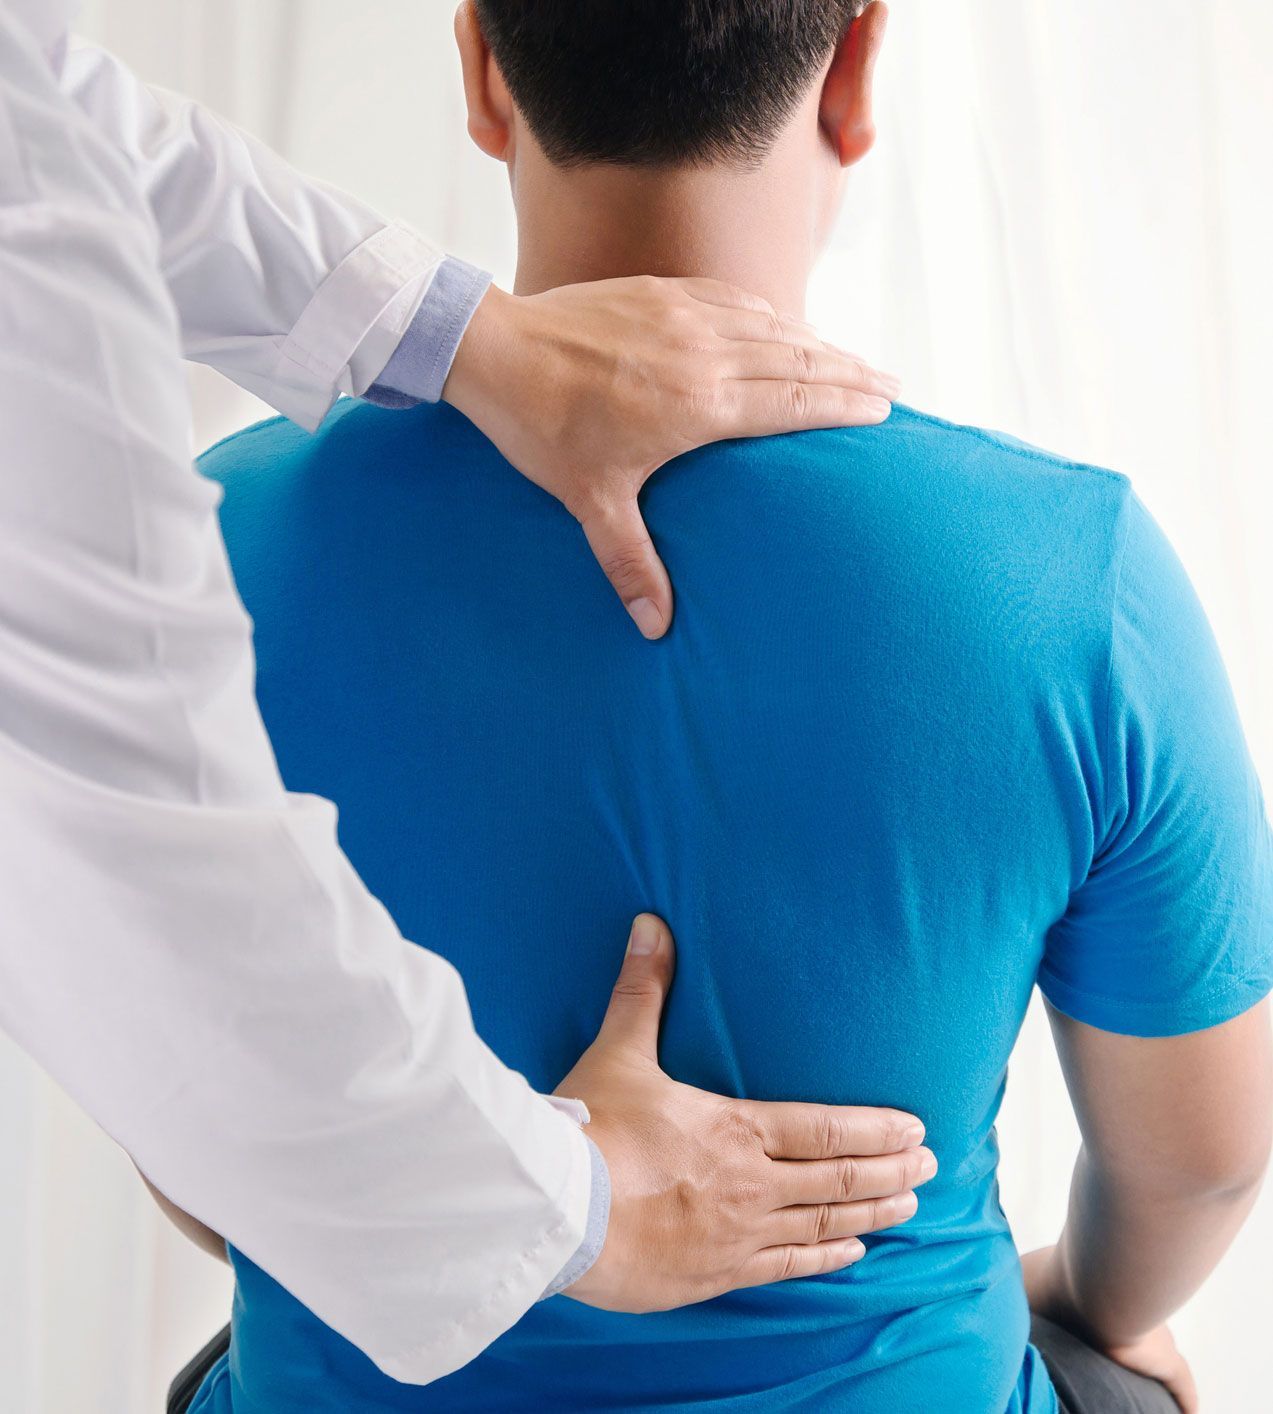 Chiropractor Checking Man's Back — Ponte Vedra Beach, FL — Science Based Wellness & Chiropractic